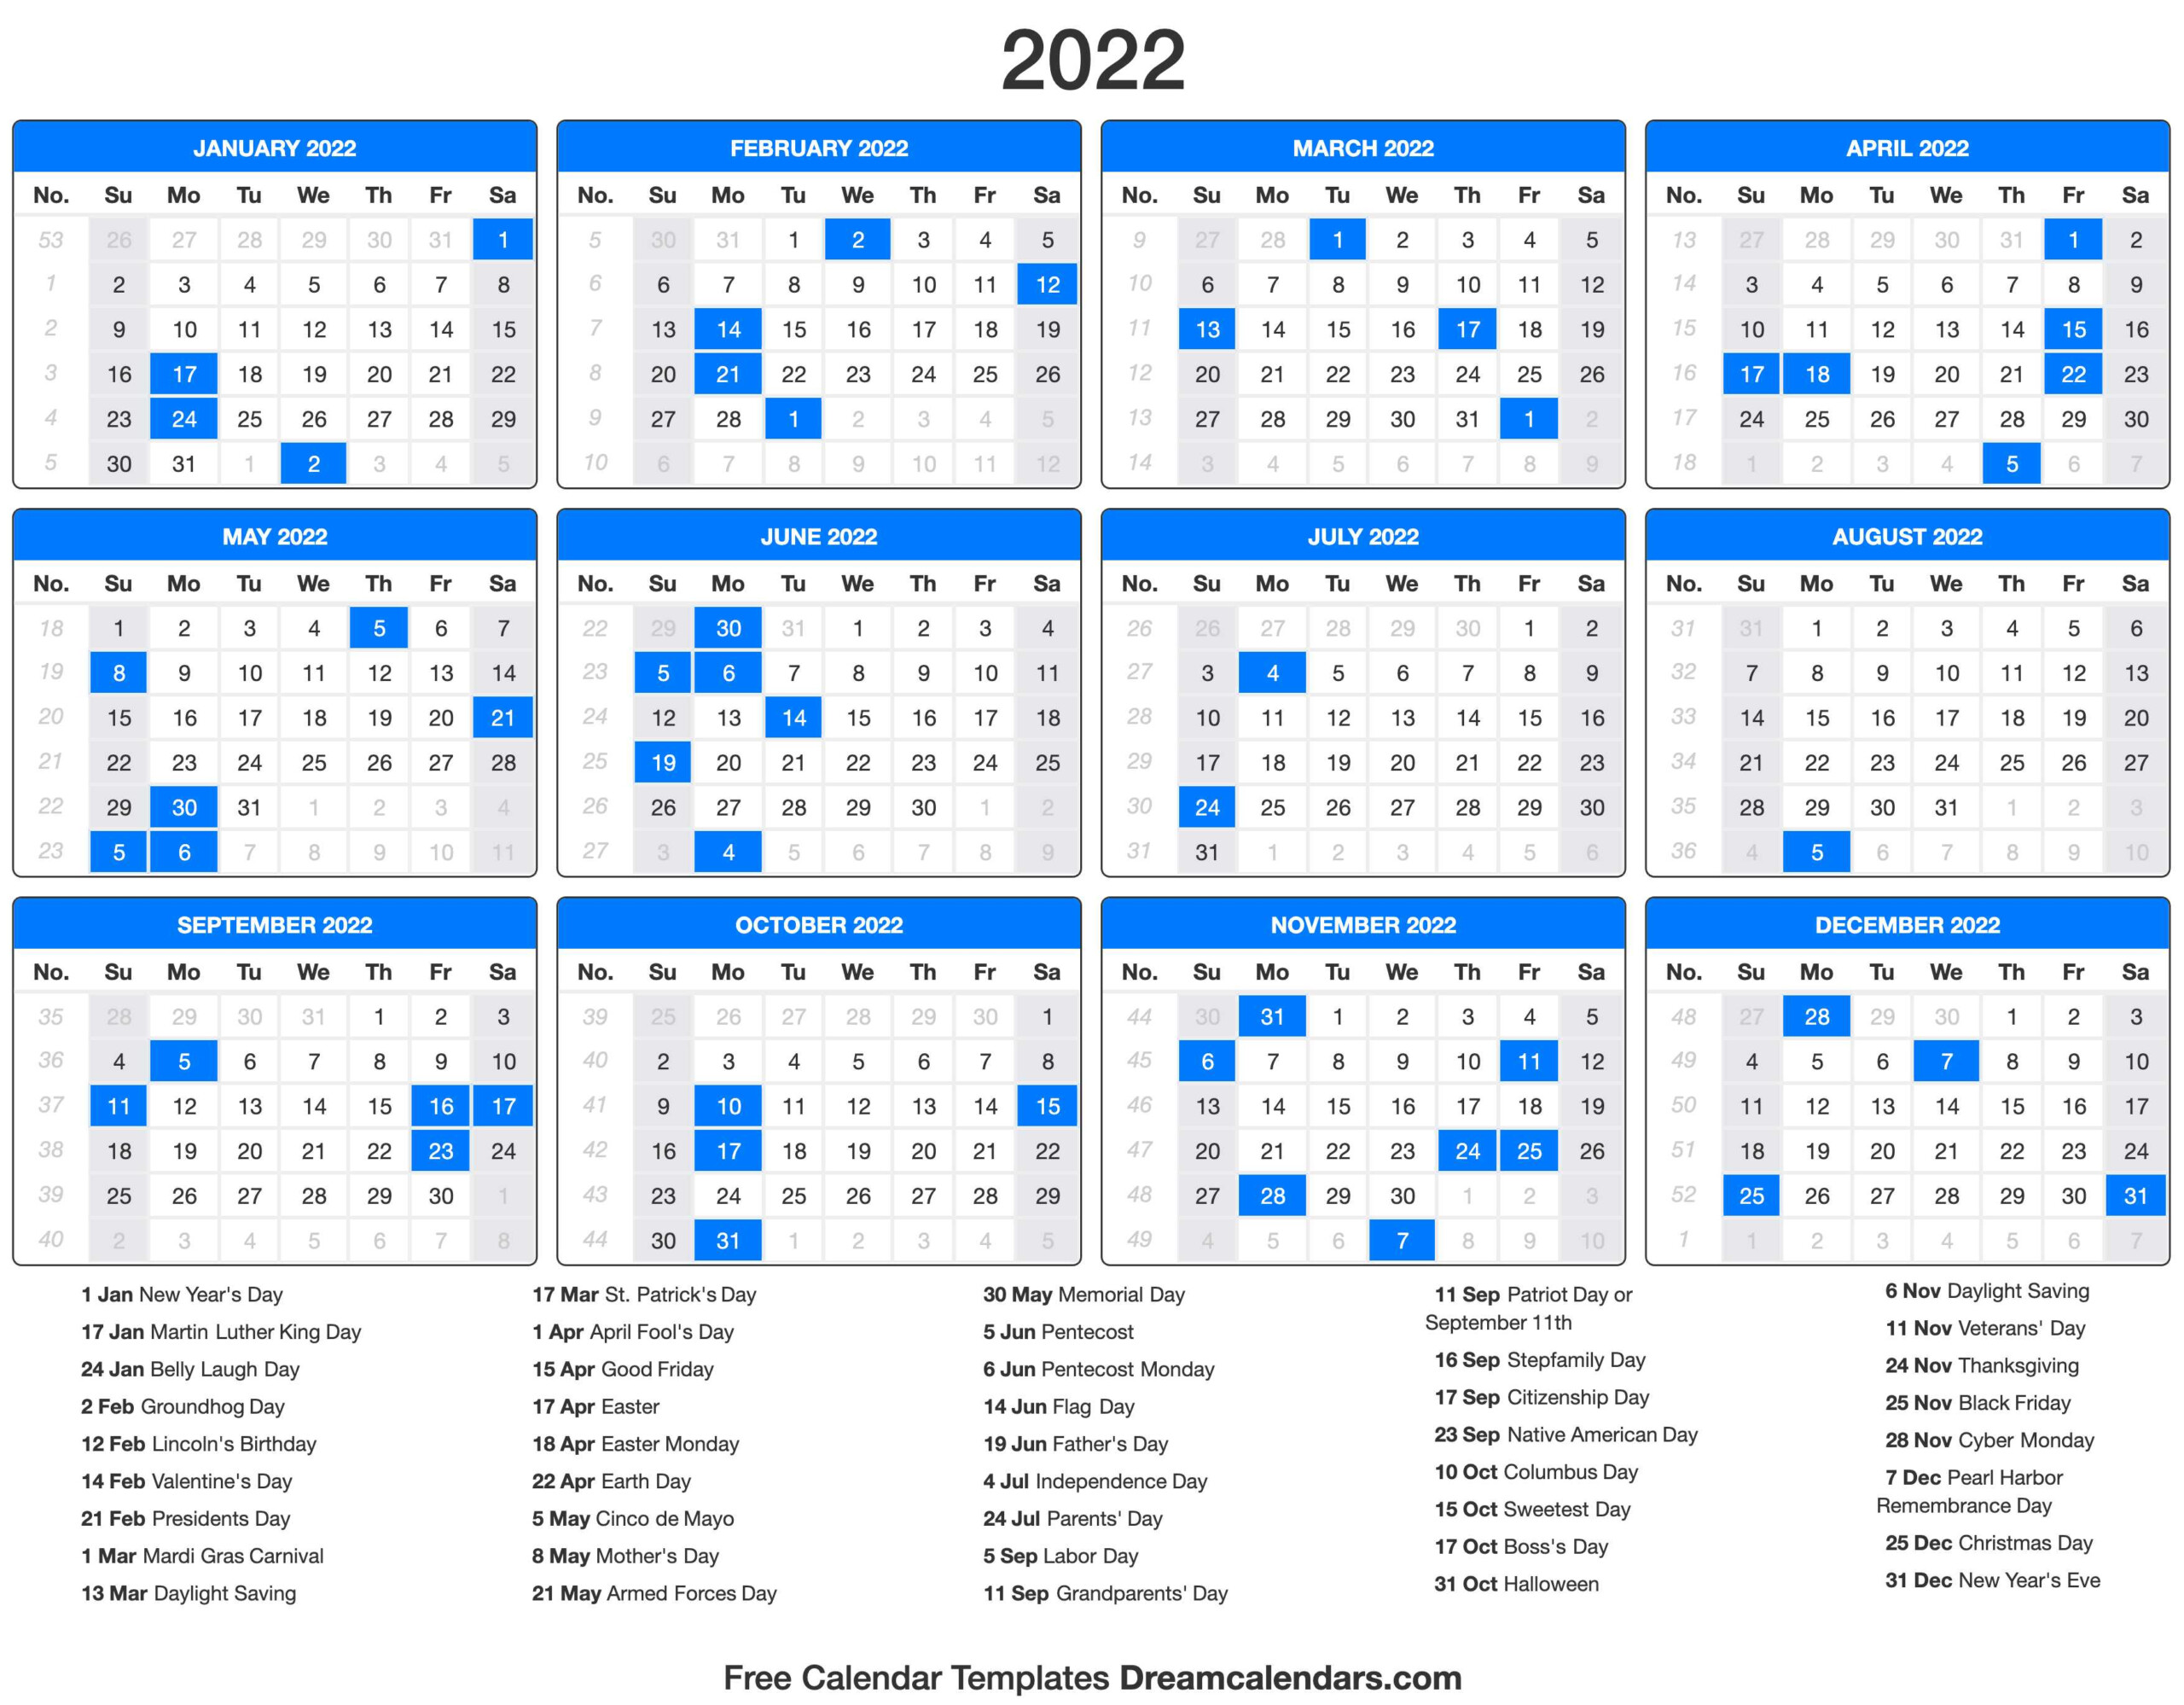 leap-year-2024-calendar-2024-calendar-printable